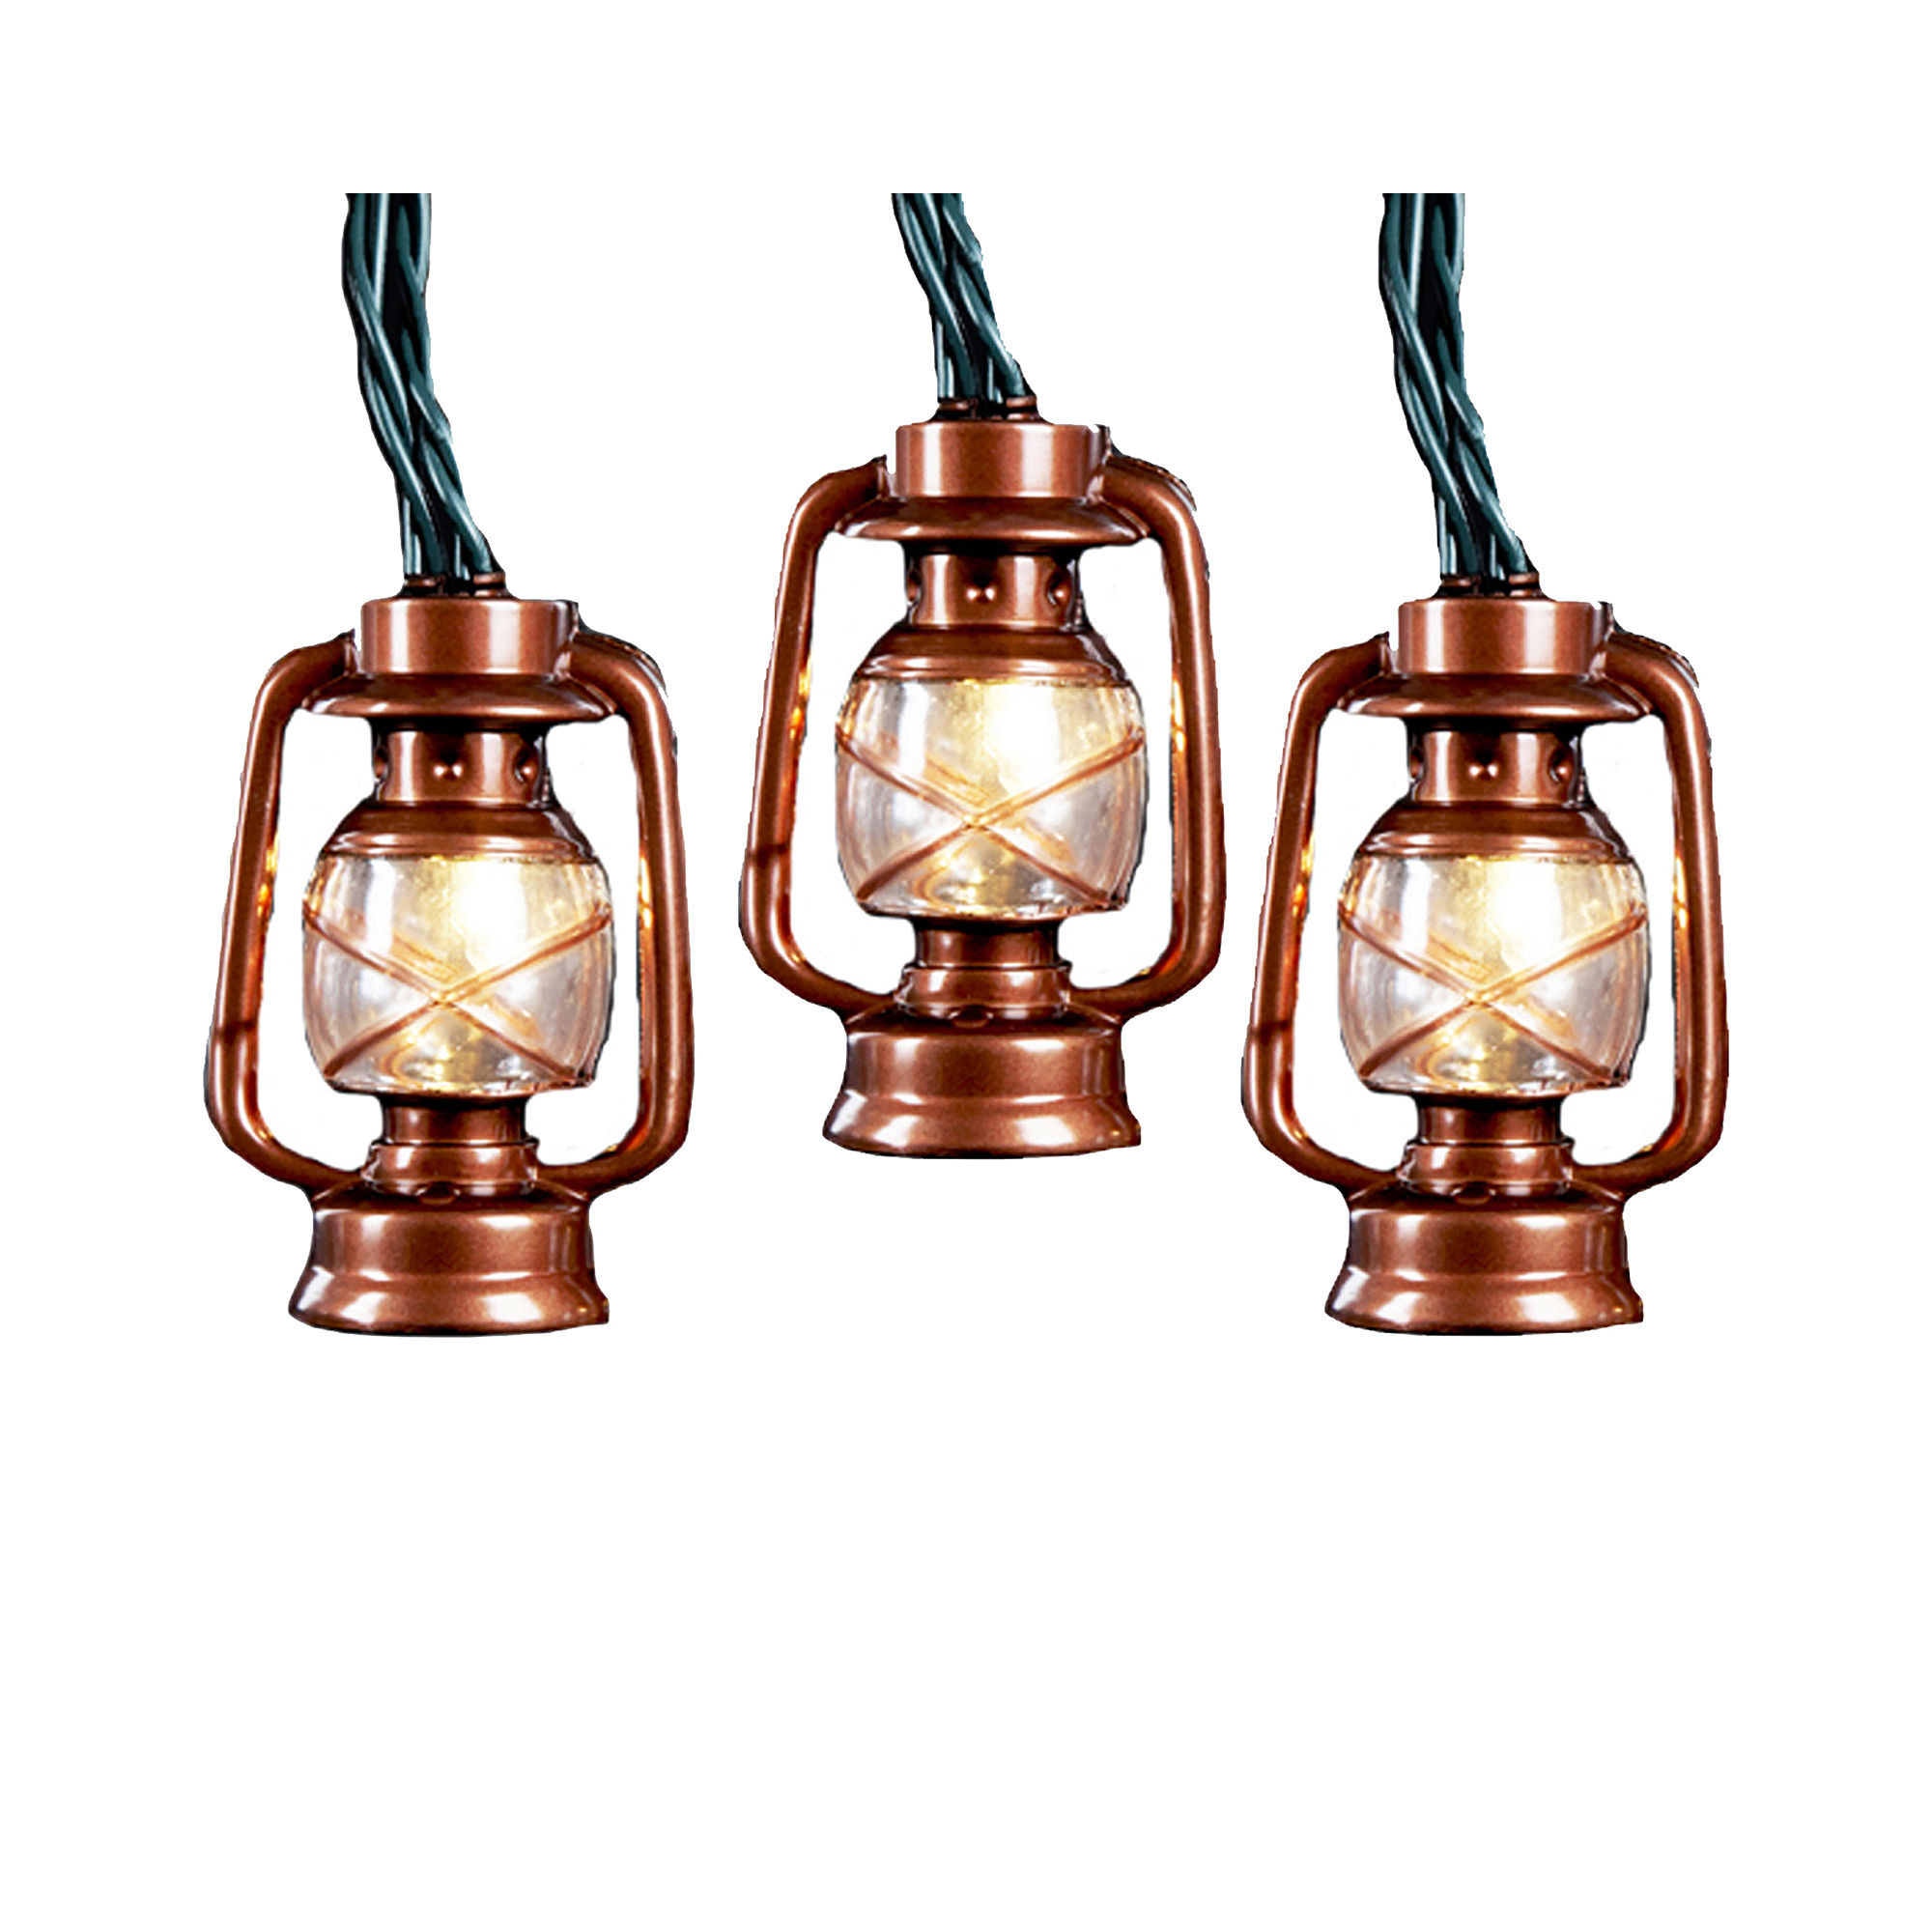 UPC 086131193316 product image for Kurt Adler 10-Light Brass Lantern Light Set | upcitemdb.com